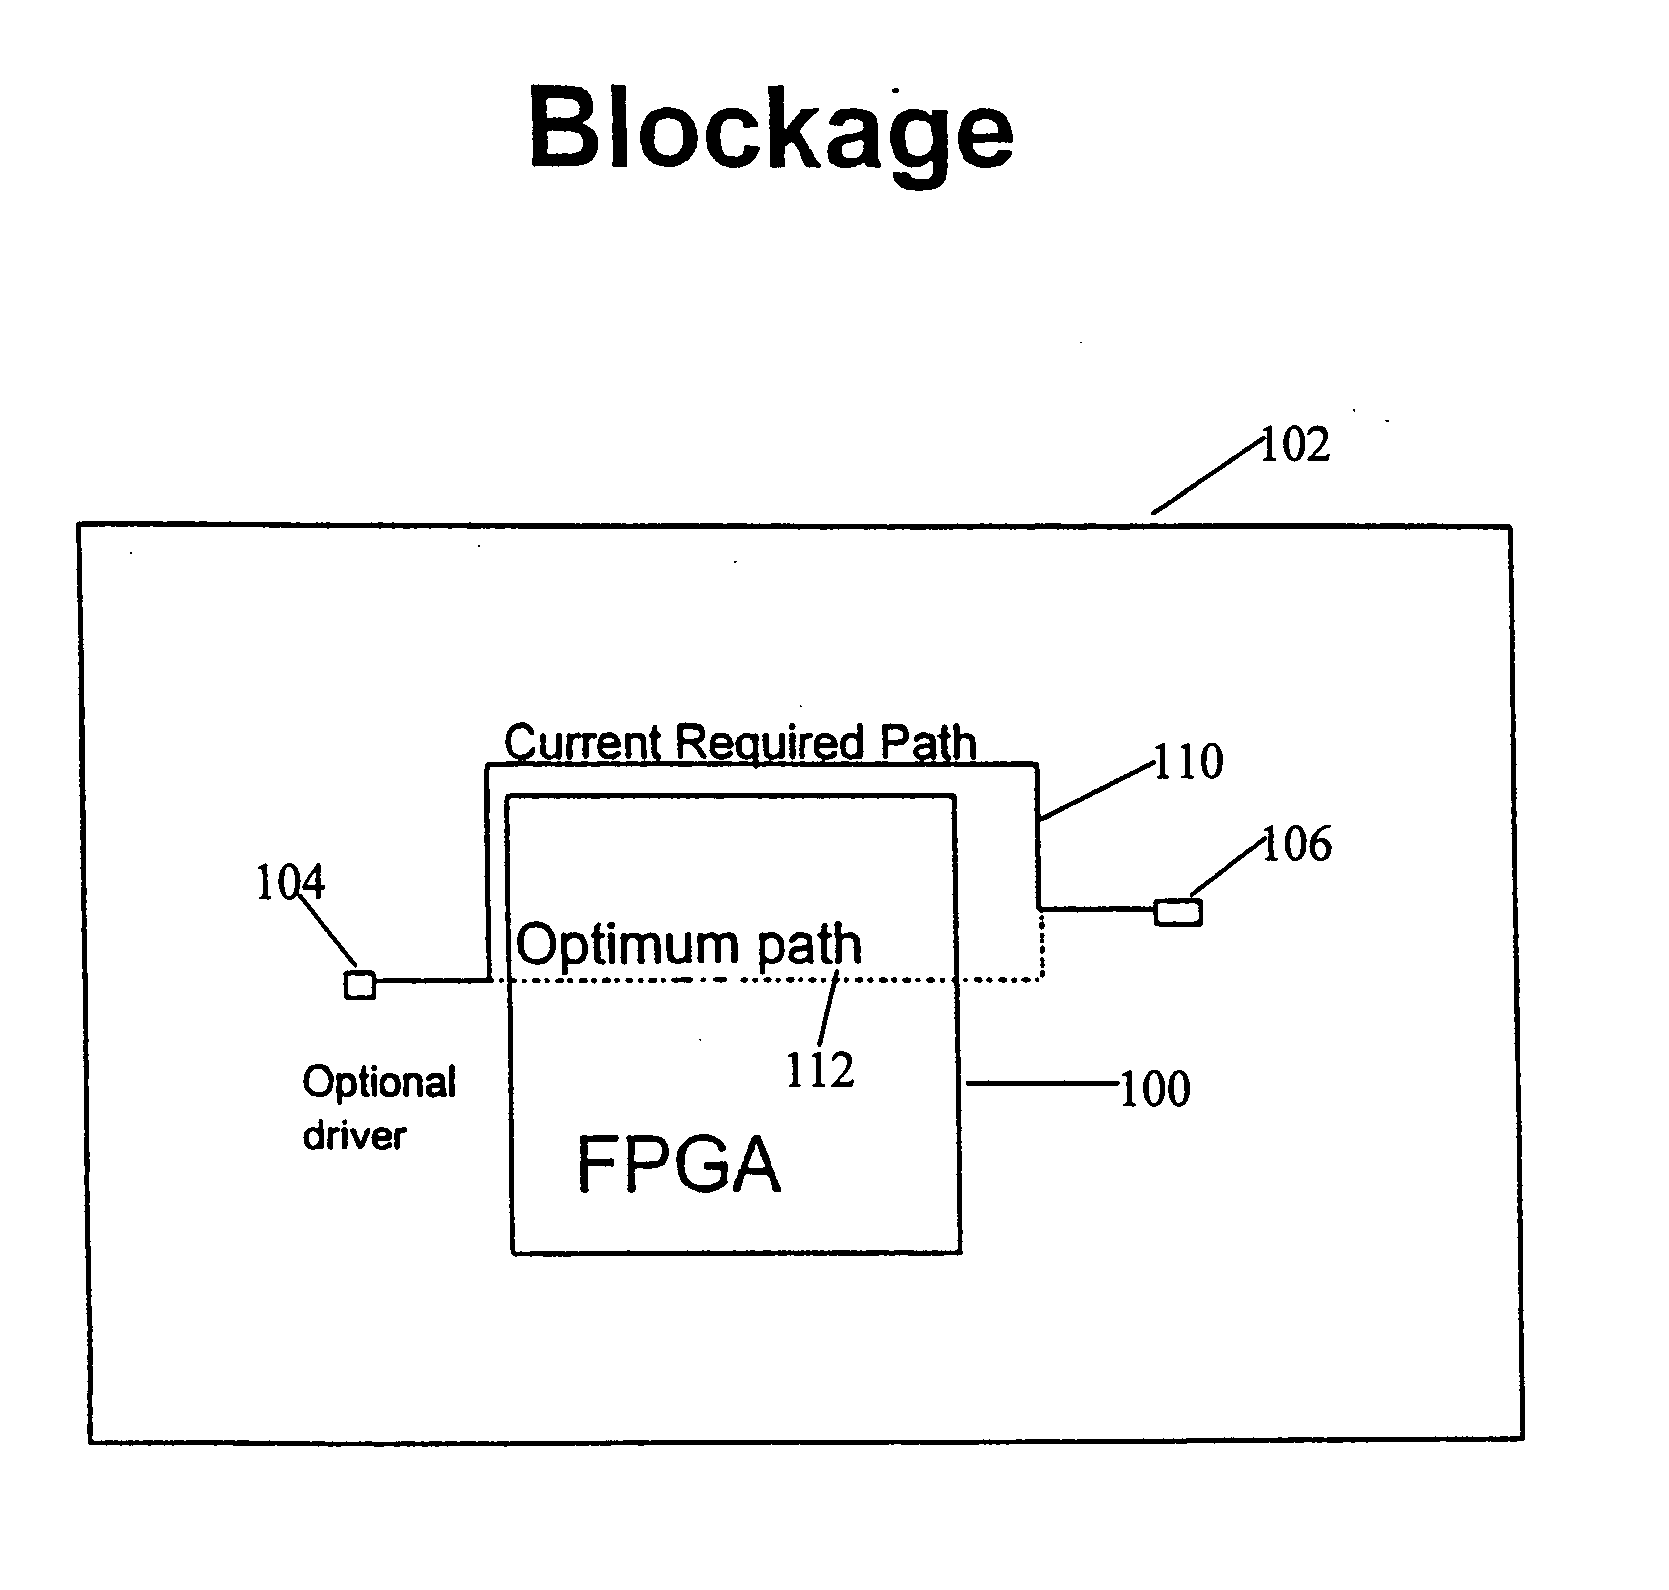 FPGA blocks with adjustable porosity pass thru